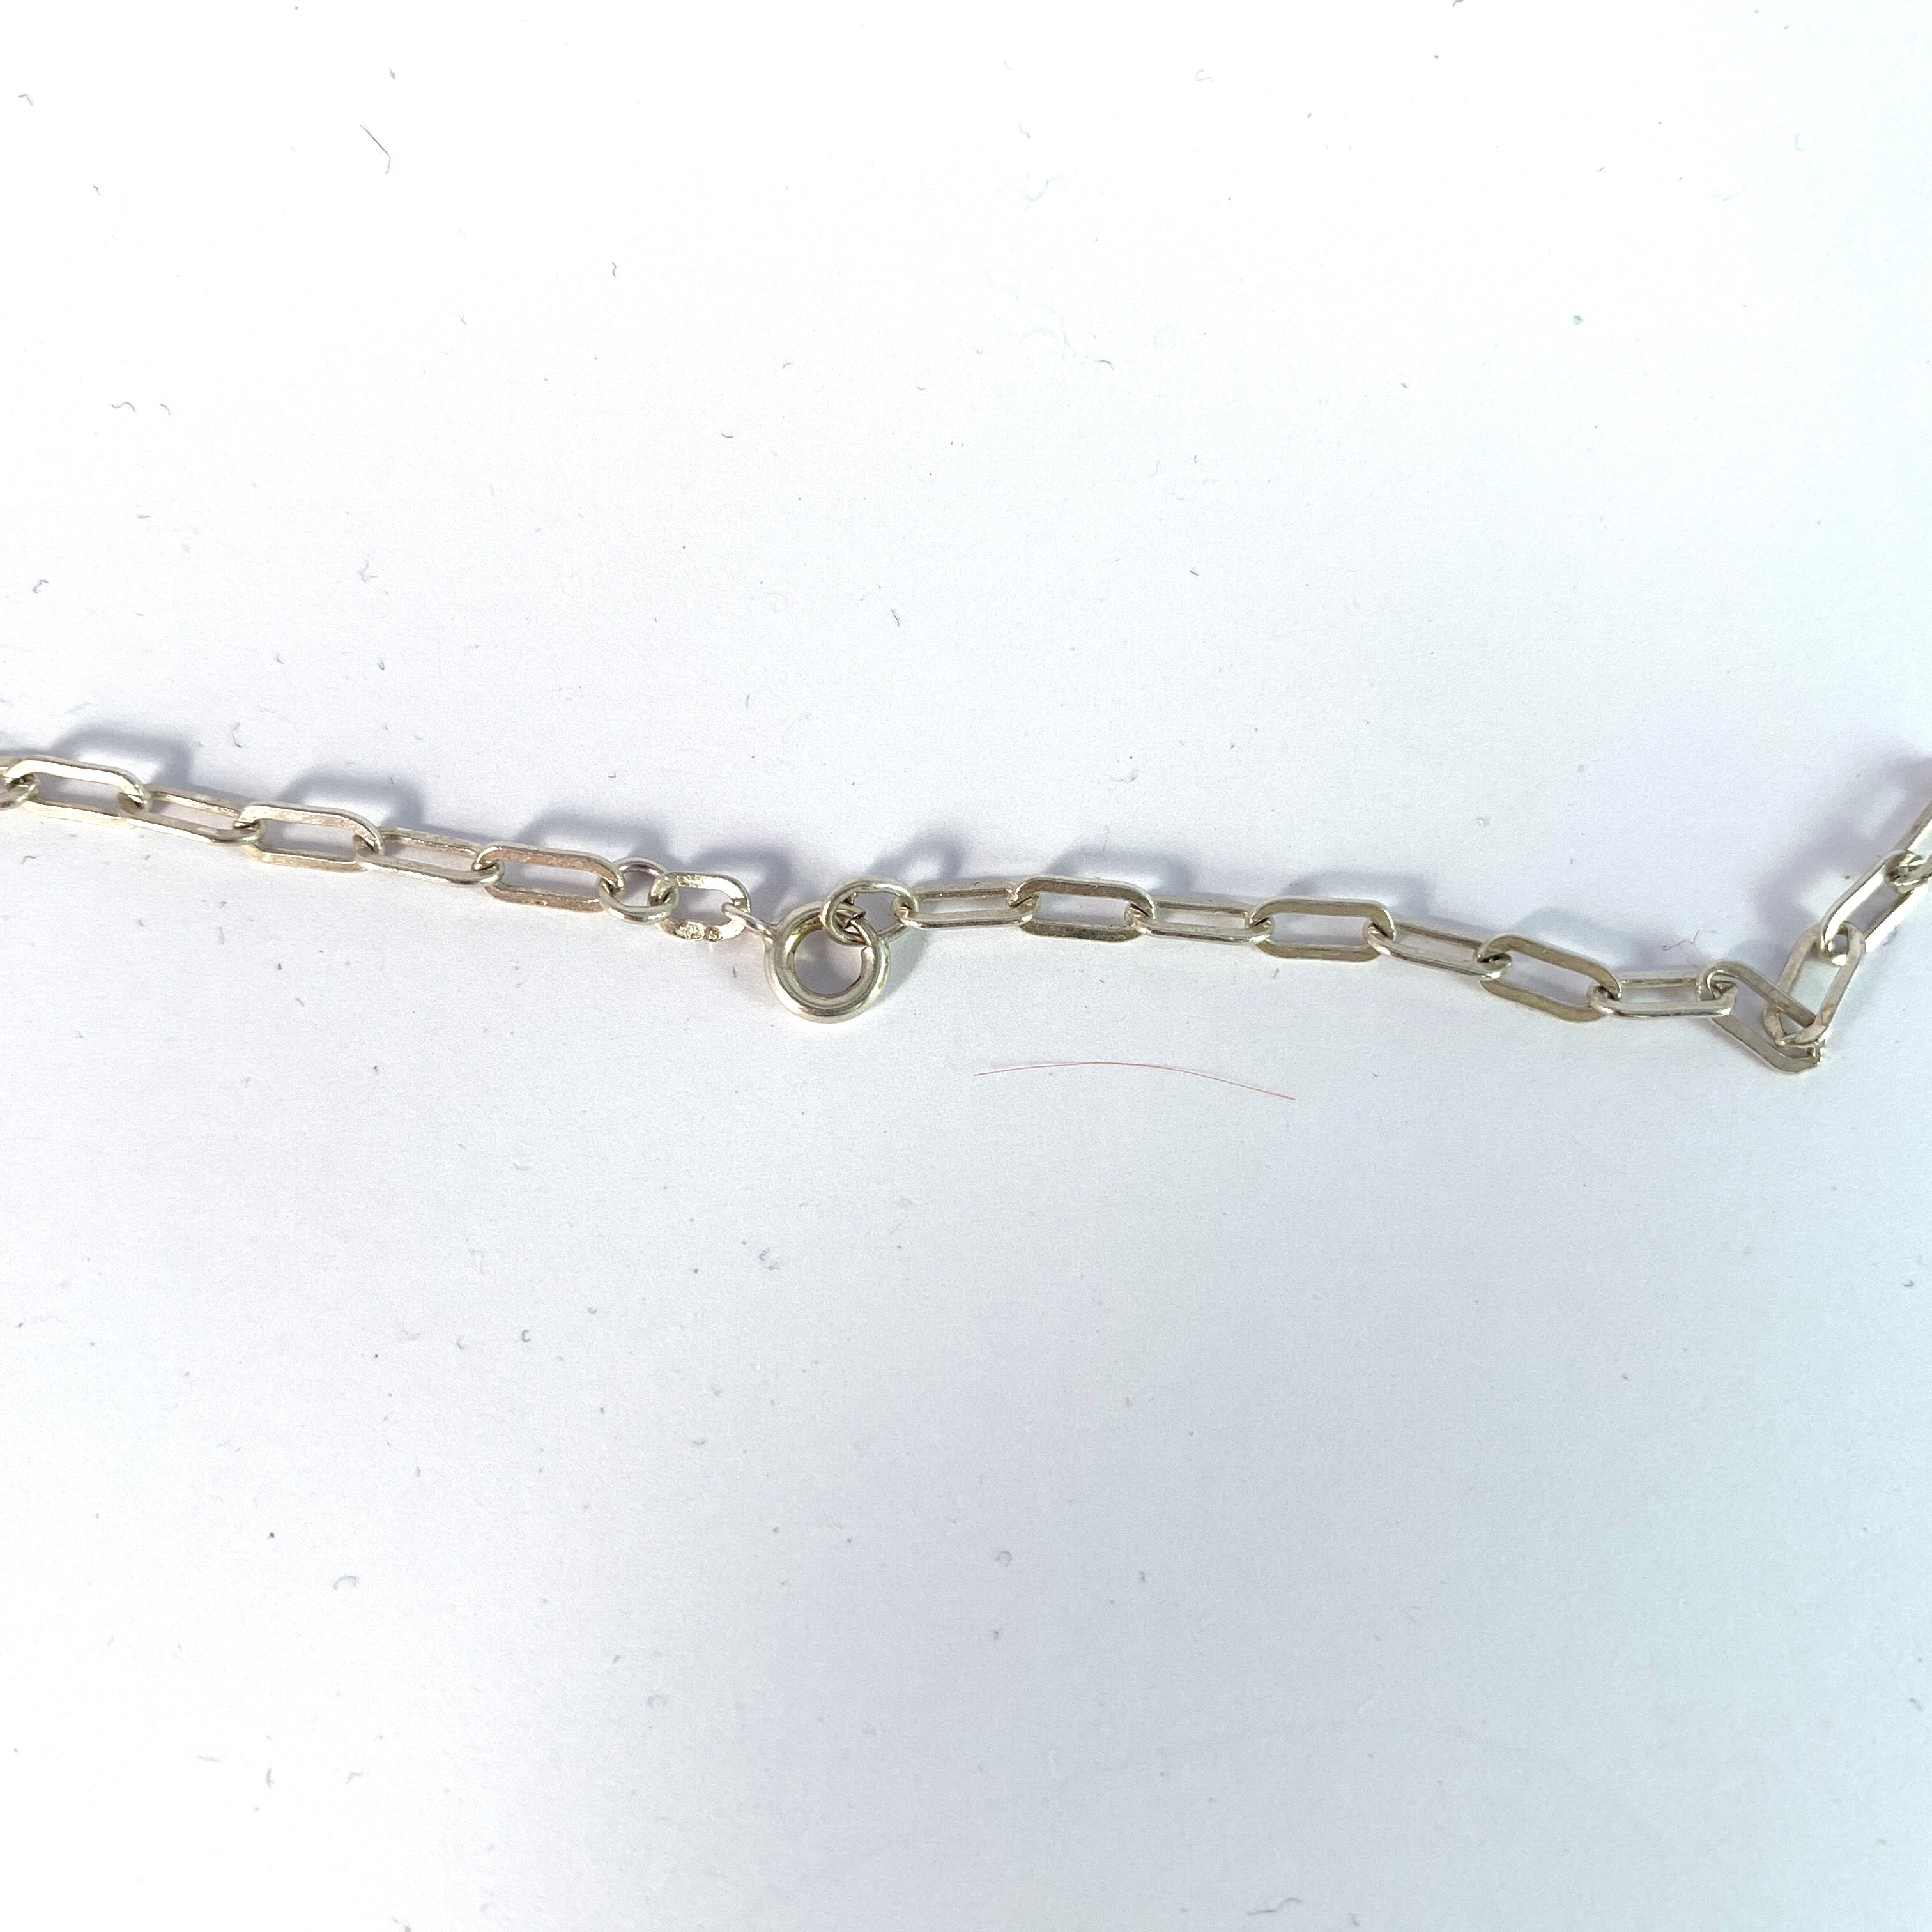 R Tennsmed, for Atelje Stigbert, Sweden year 1960, Vintage Sterling Silver Pendant Necklace.